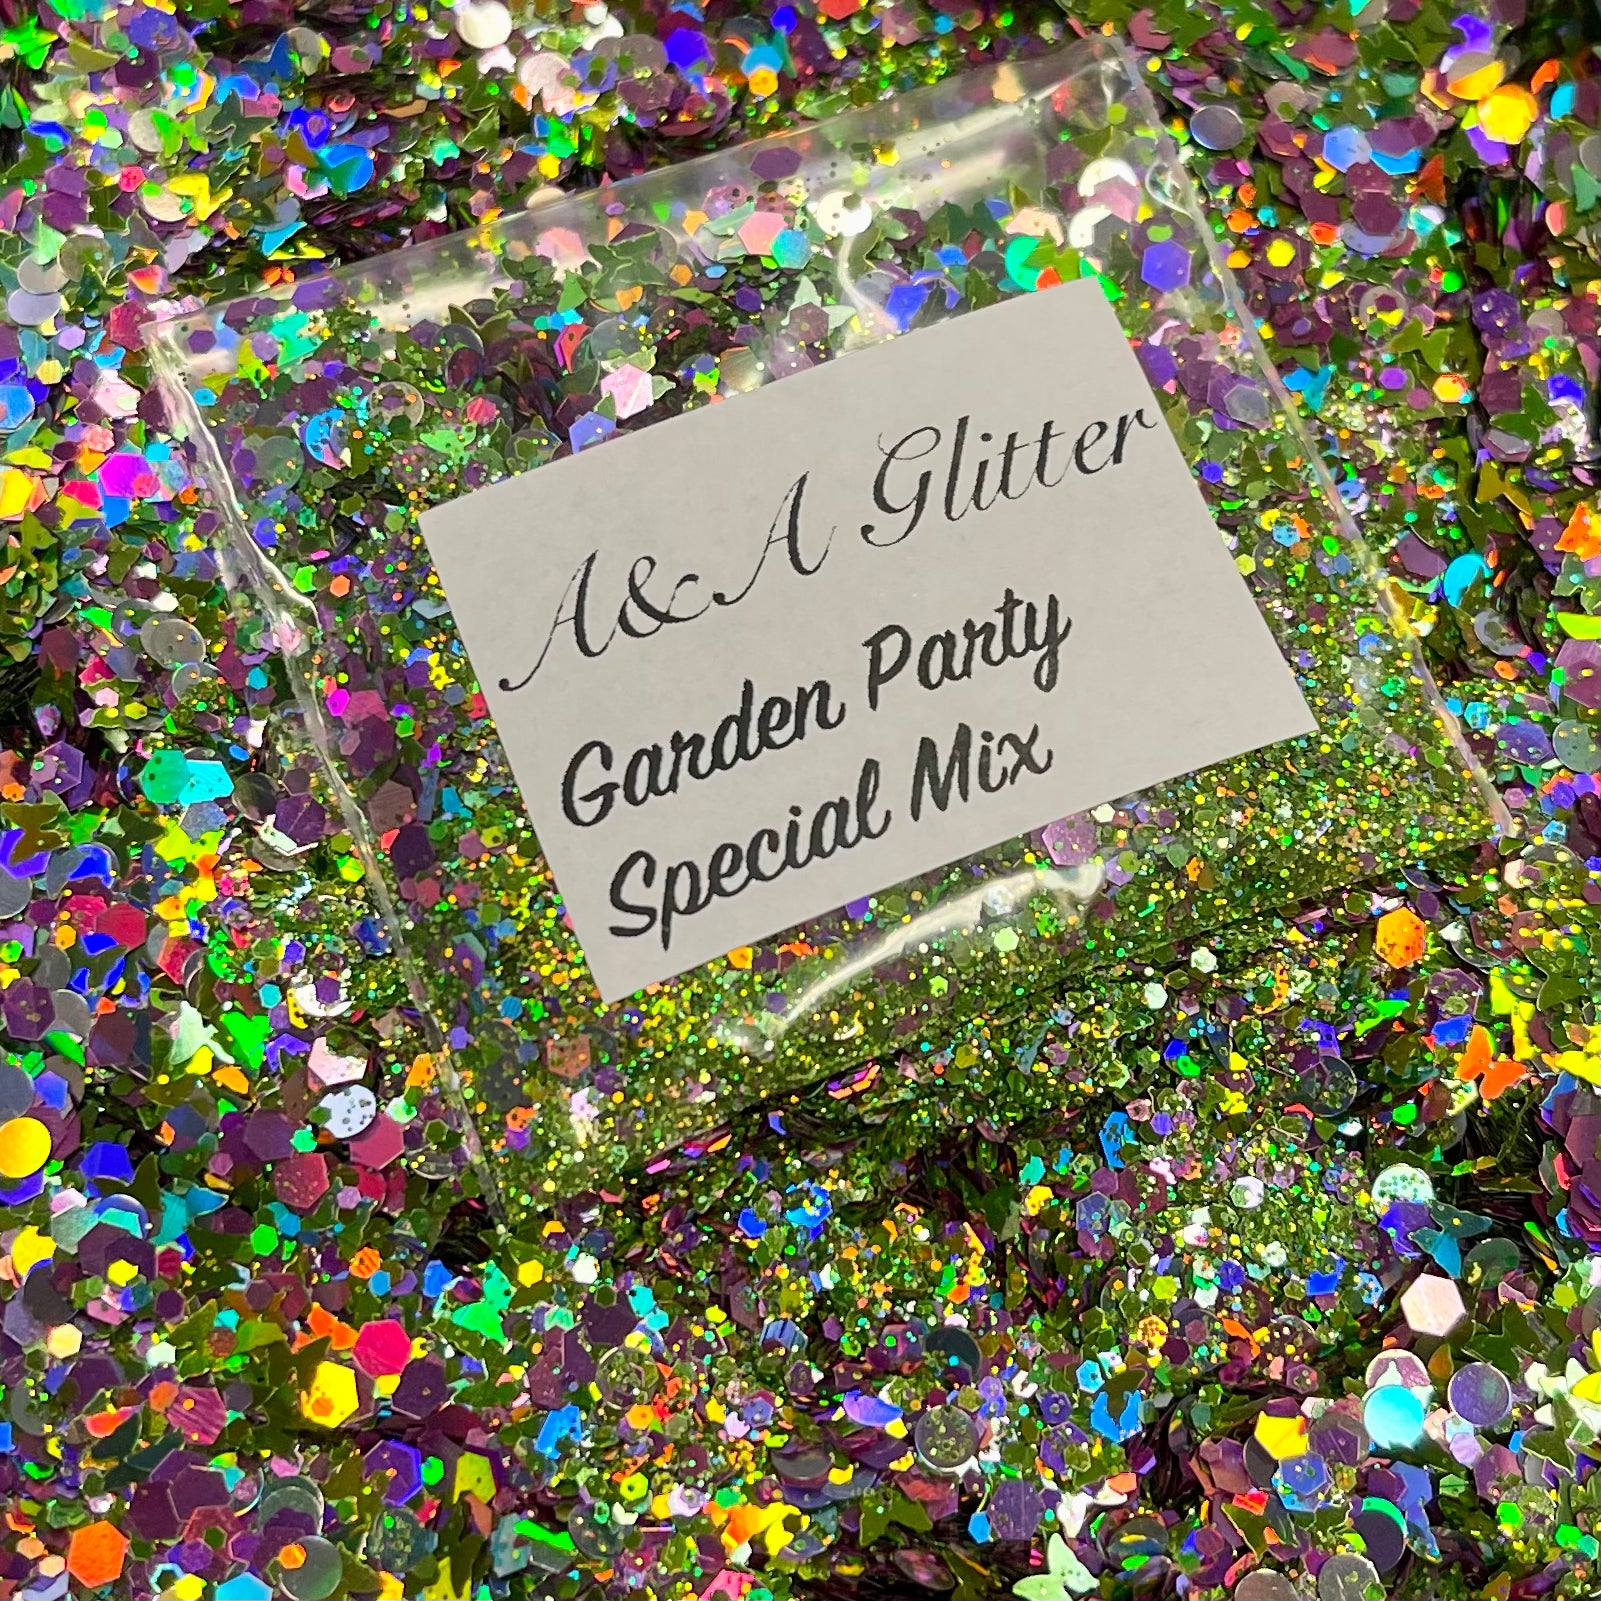 Garden Party - Special Mix